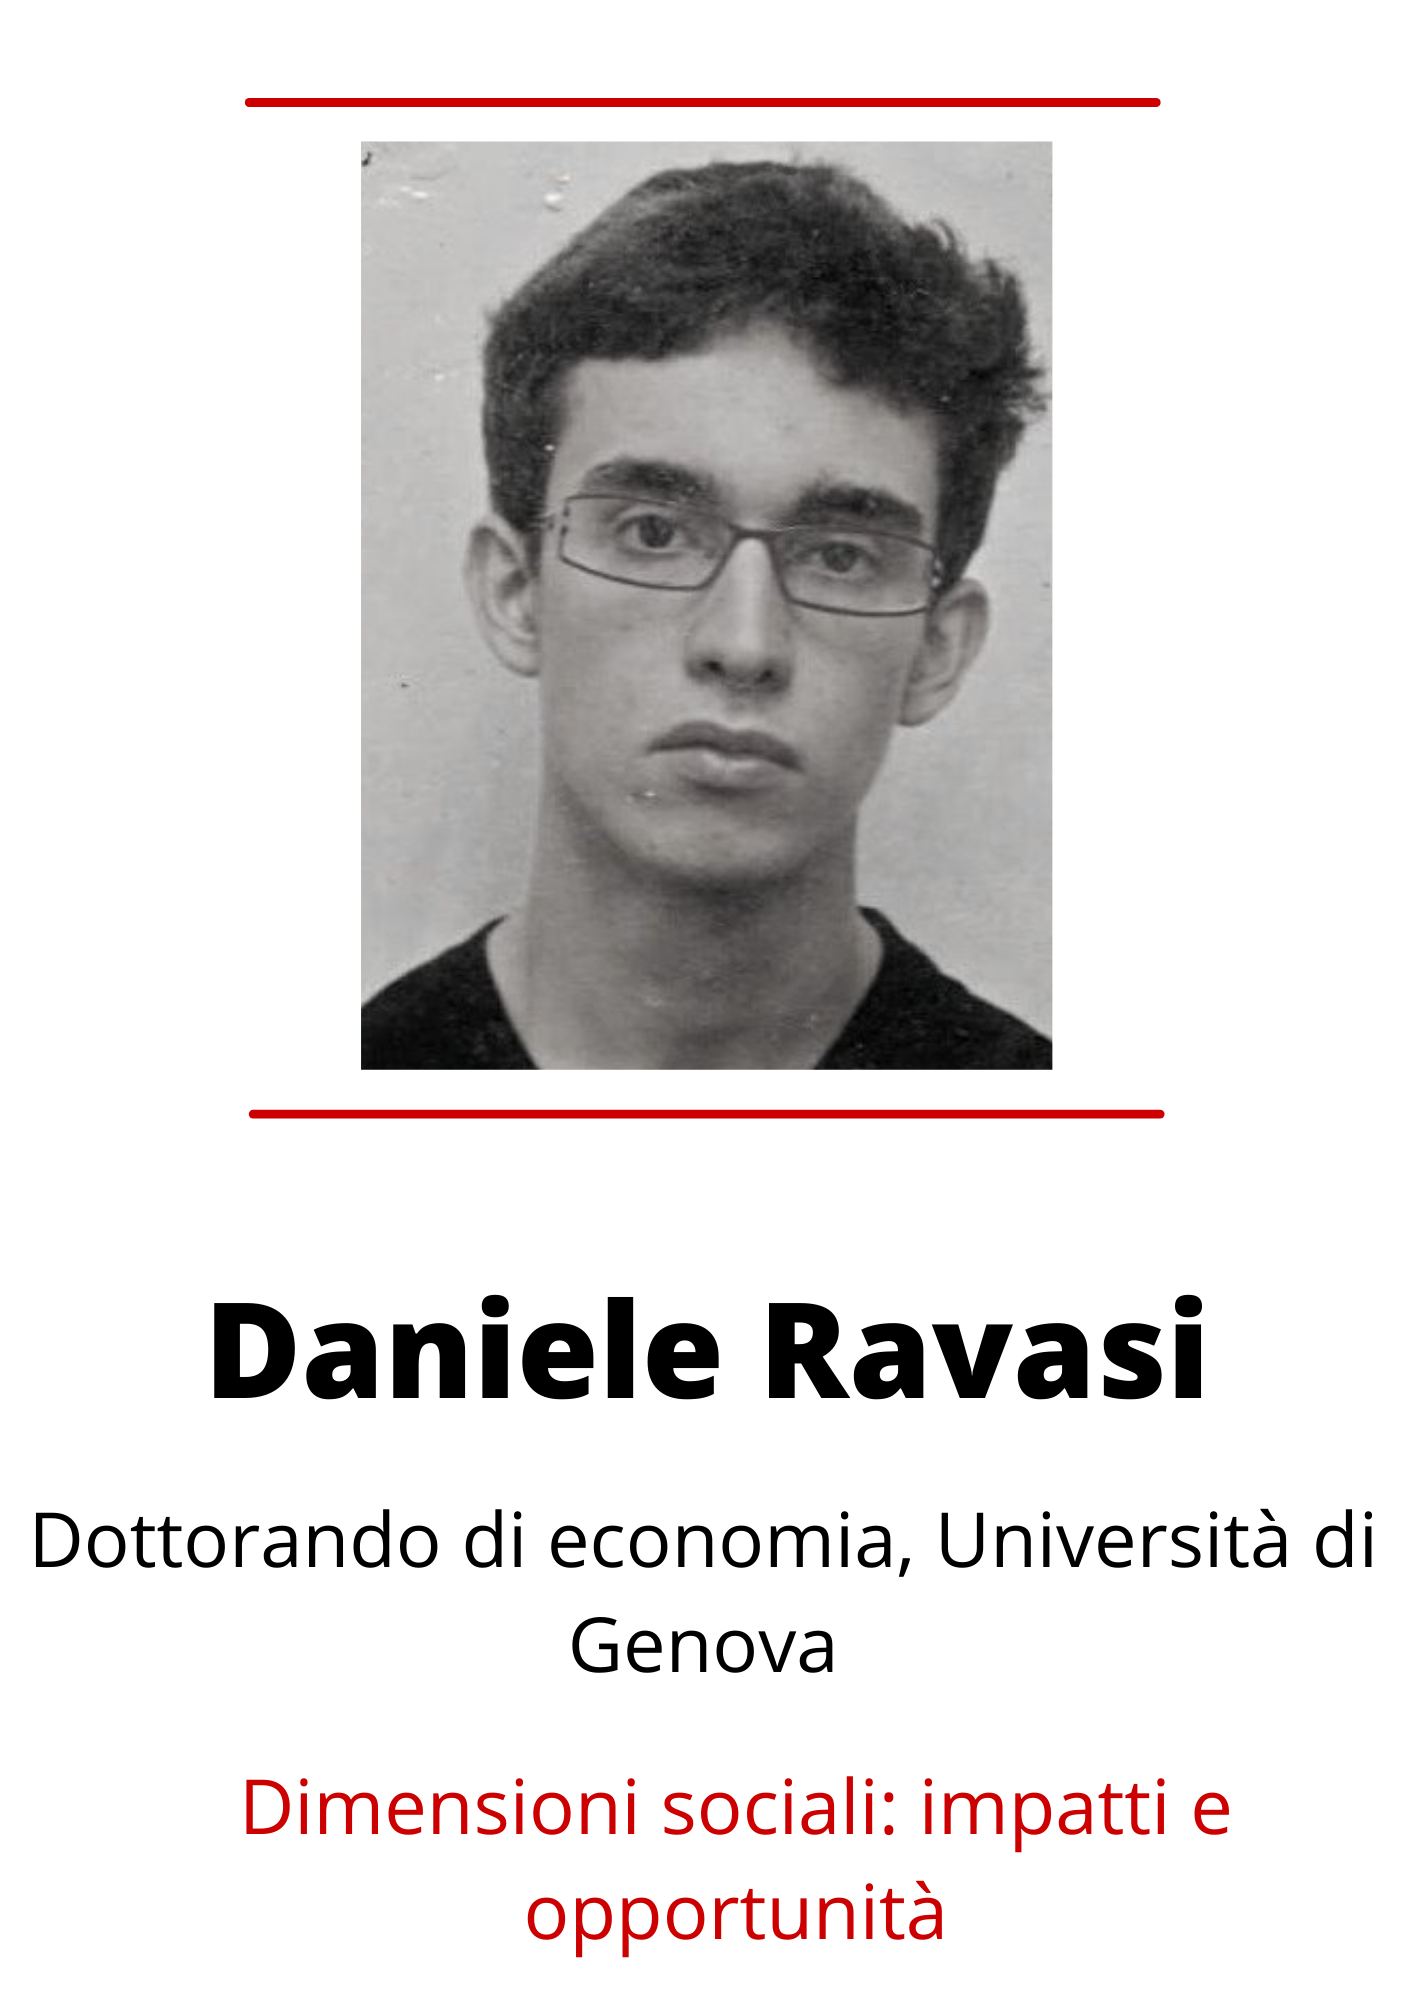 Card Daniele Ravasi